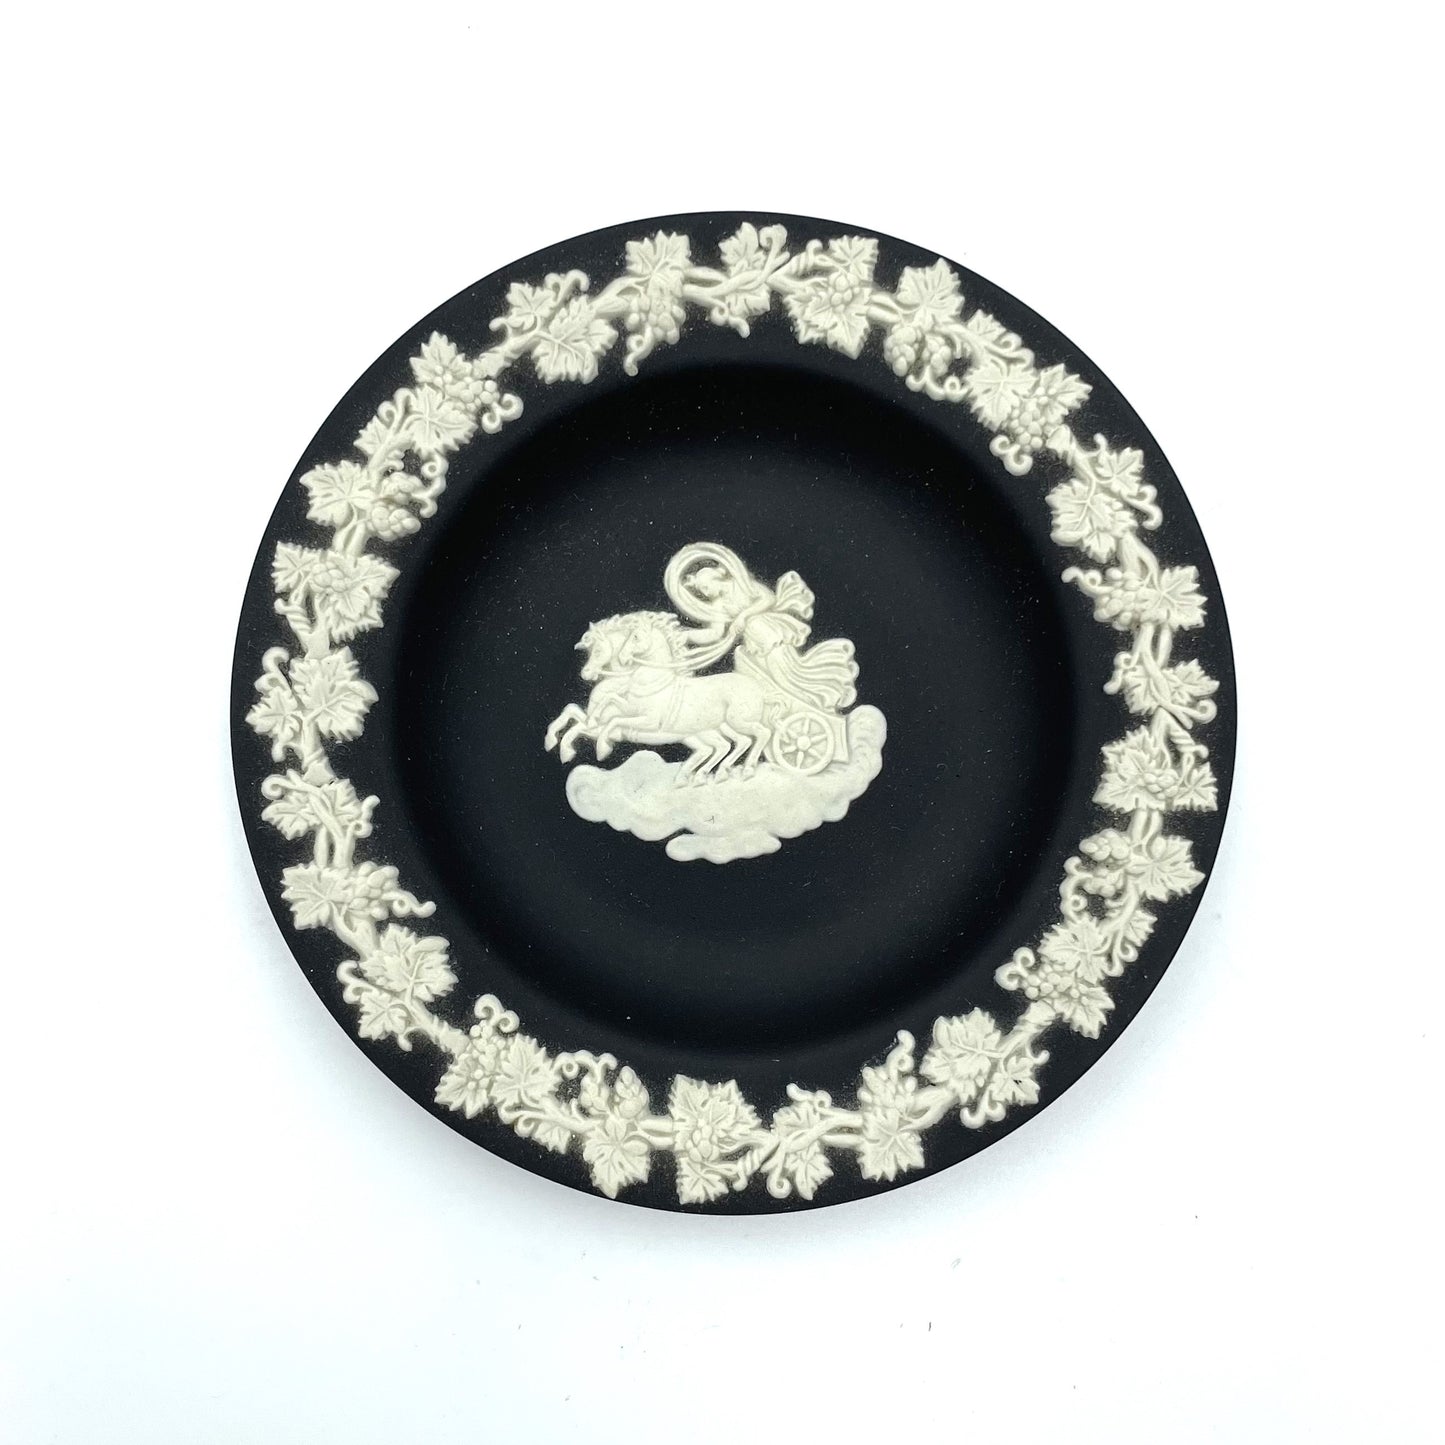 Rare Wedgwood Black Jasperware Trinket Dish - 11cm